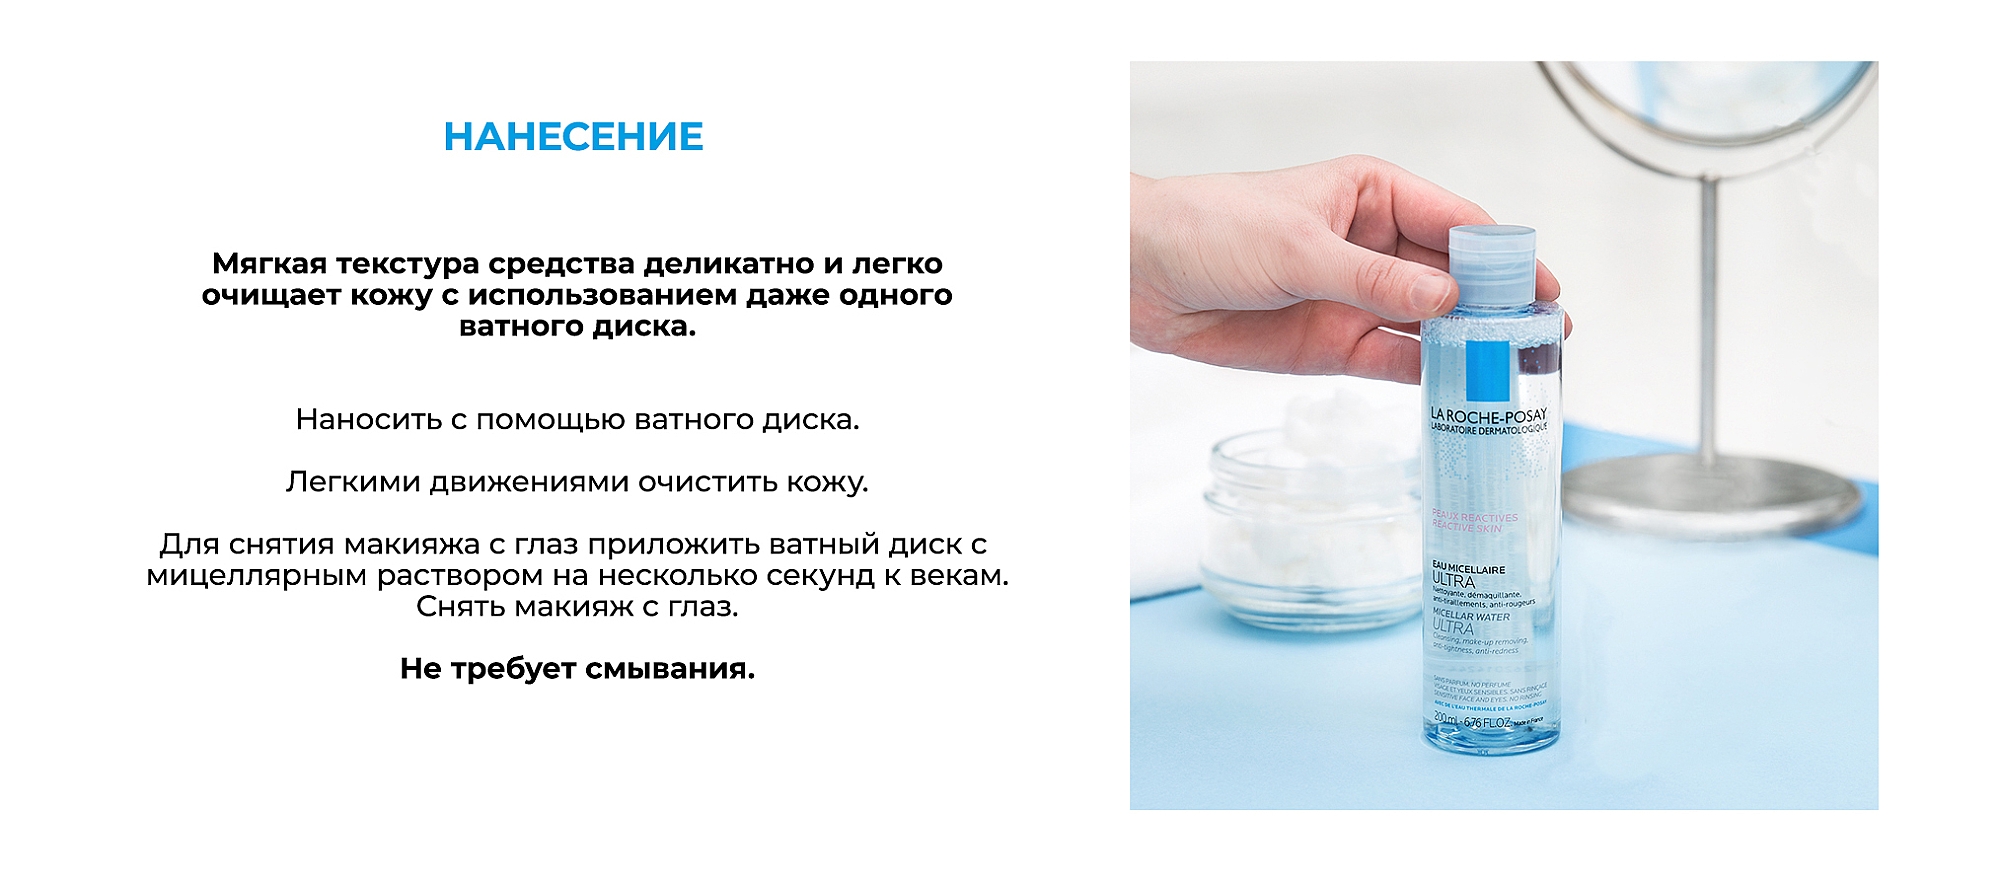 La Roche-Posay Micellar Water Ultra for Reactive Skin